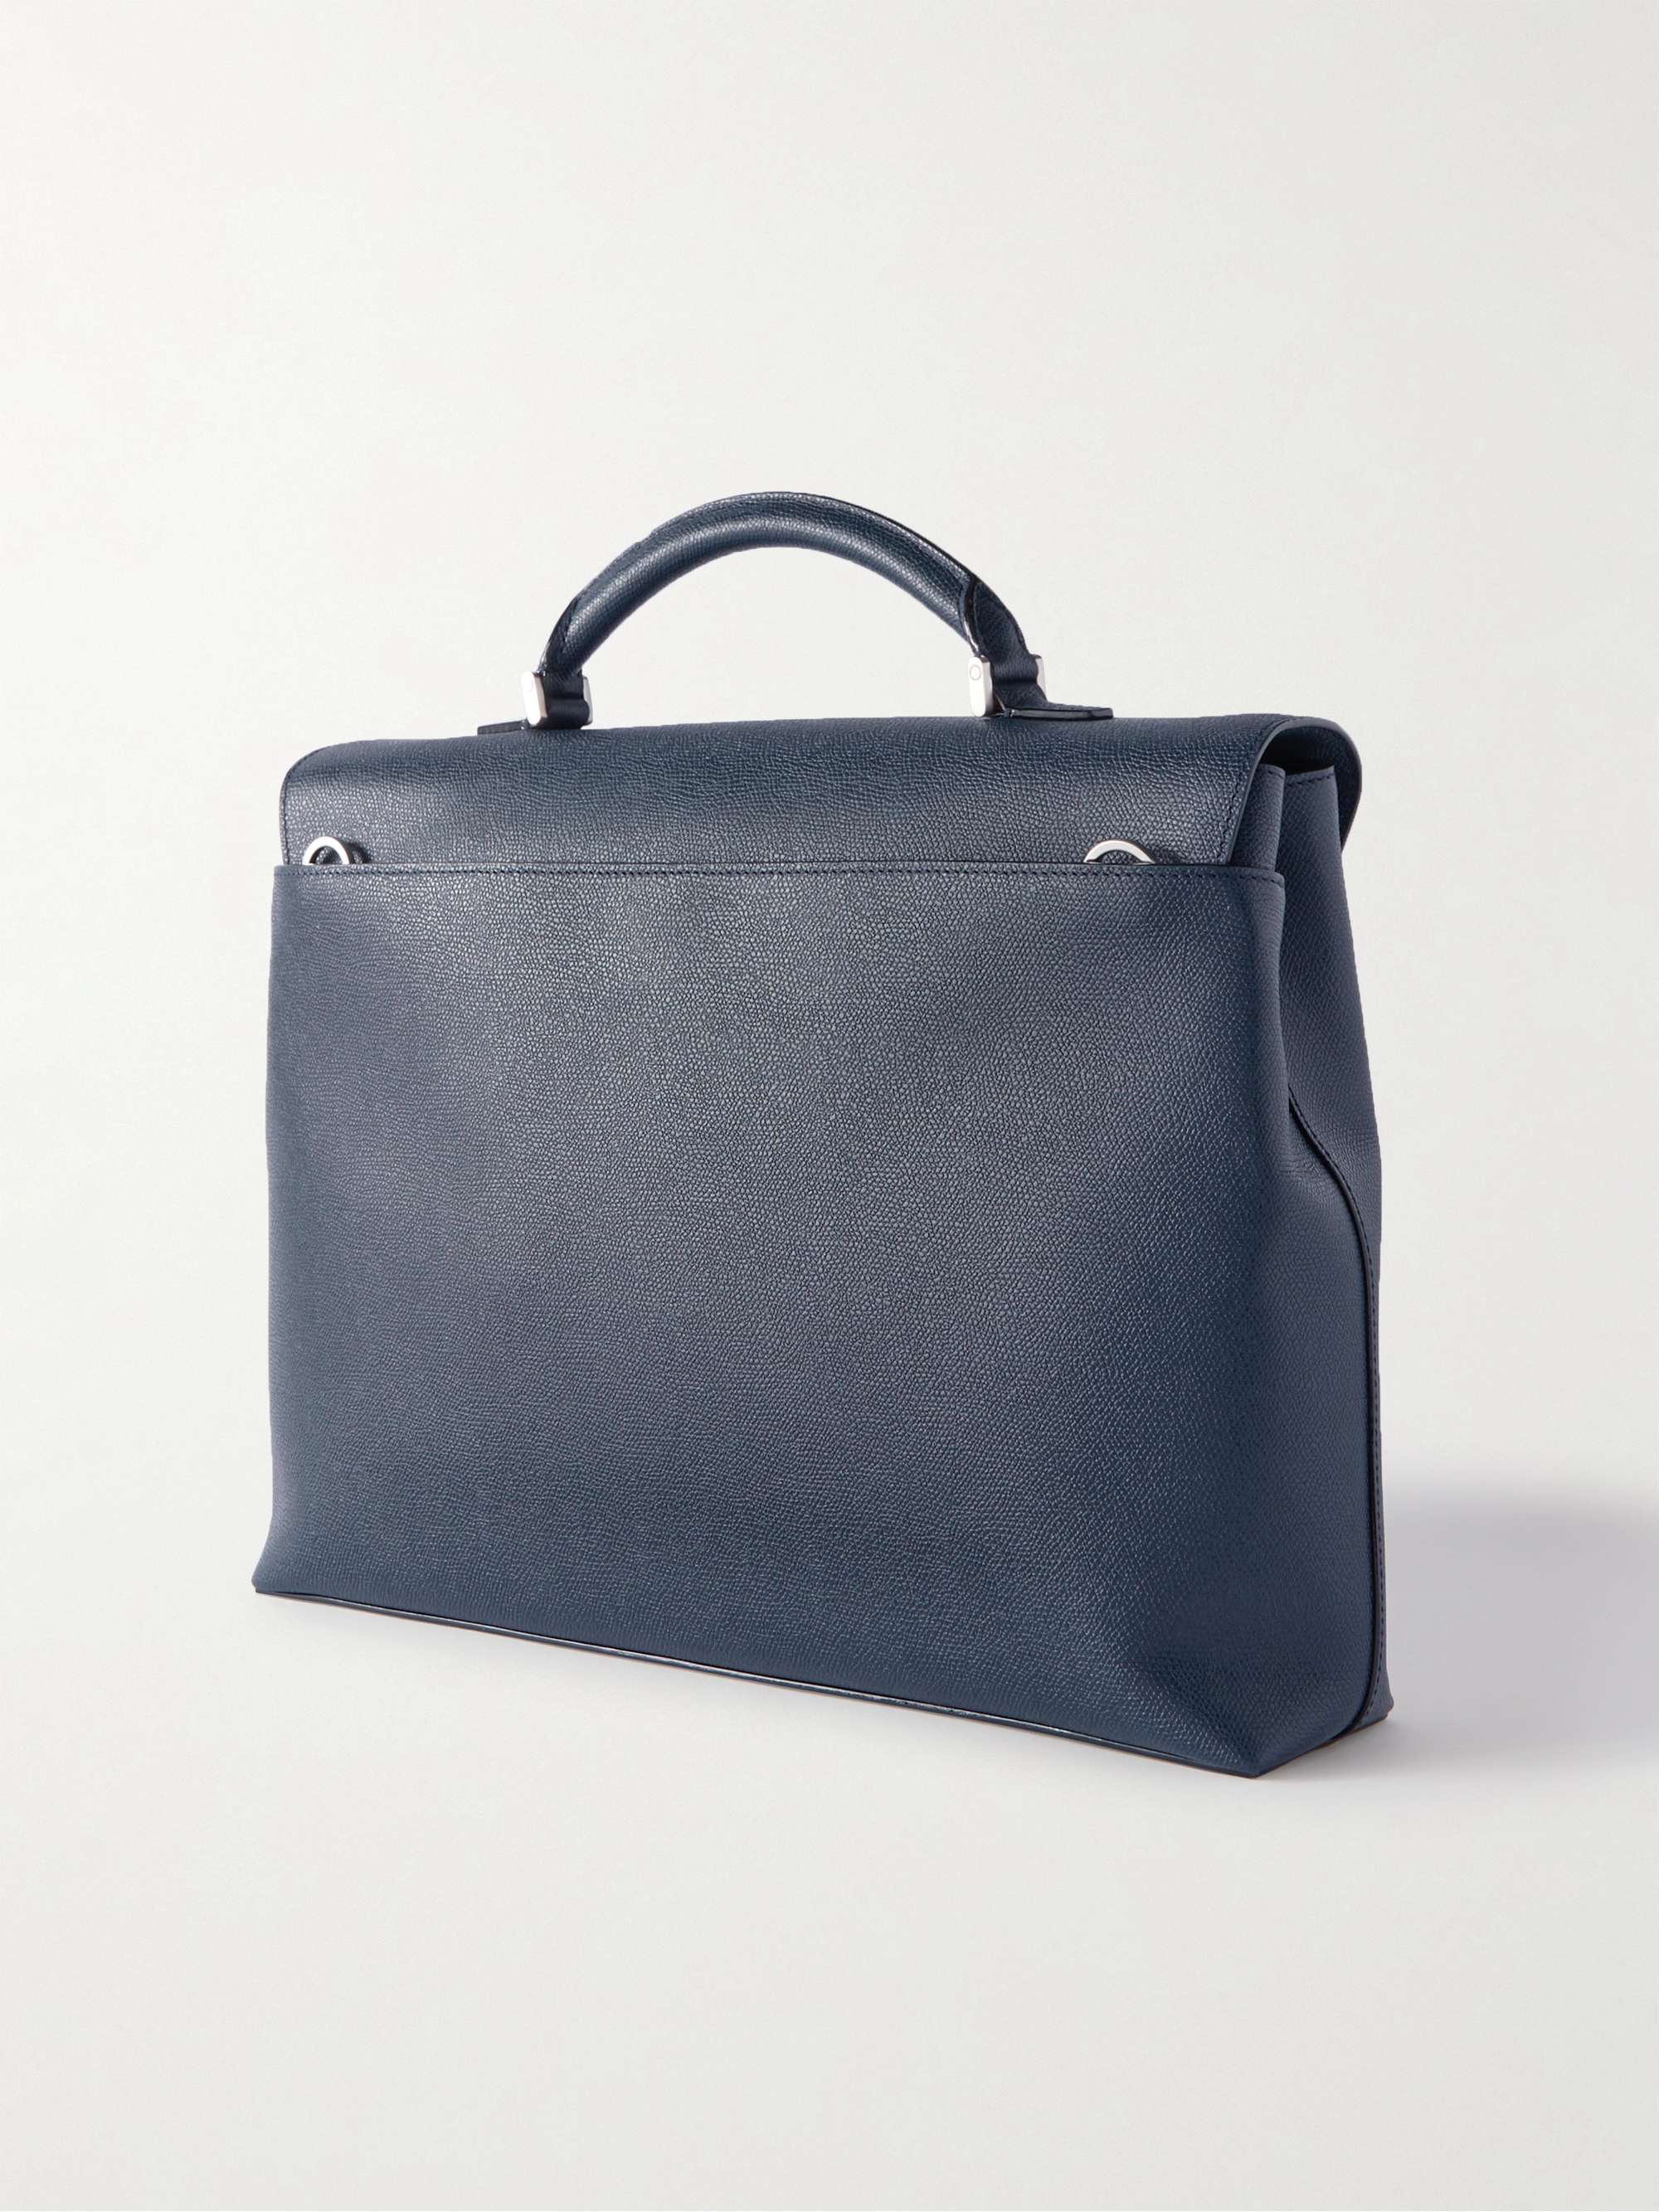 VALEXTRA Pebble-Grain Leather Briefcase